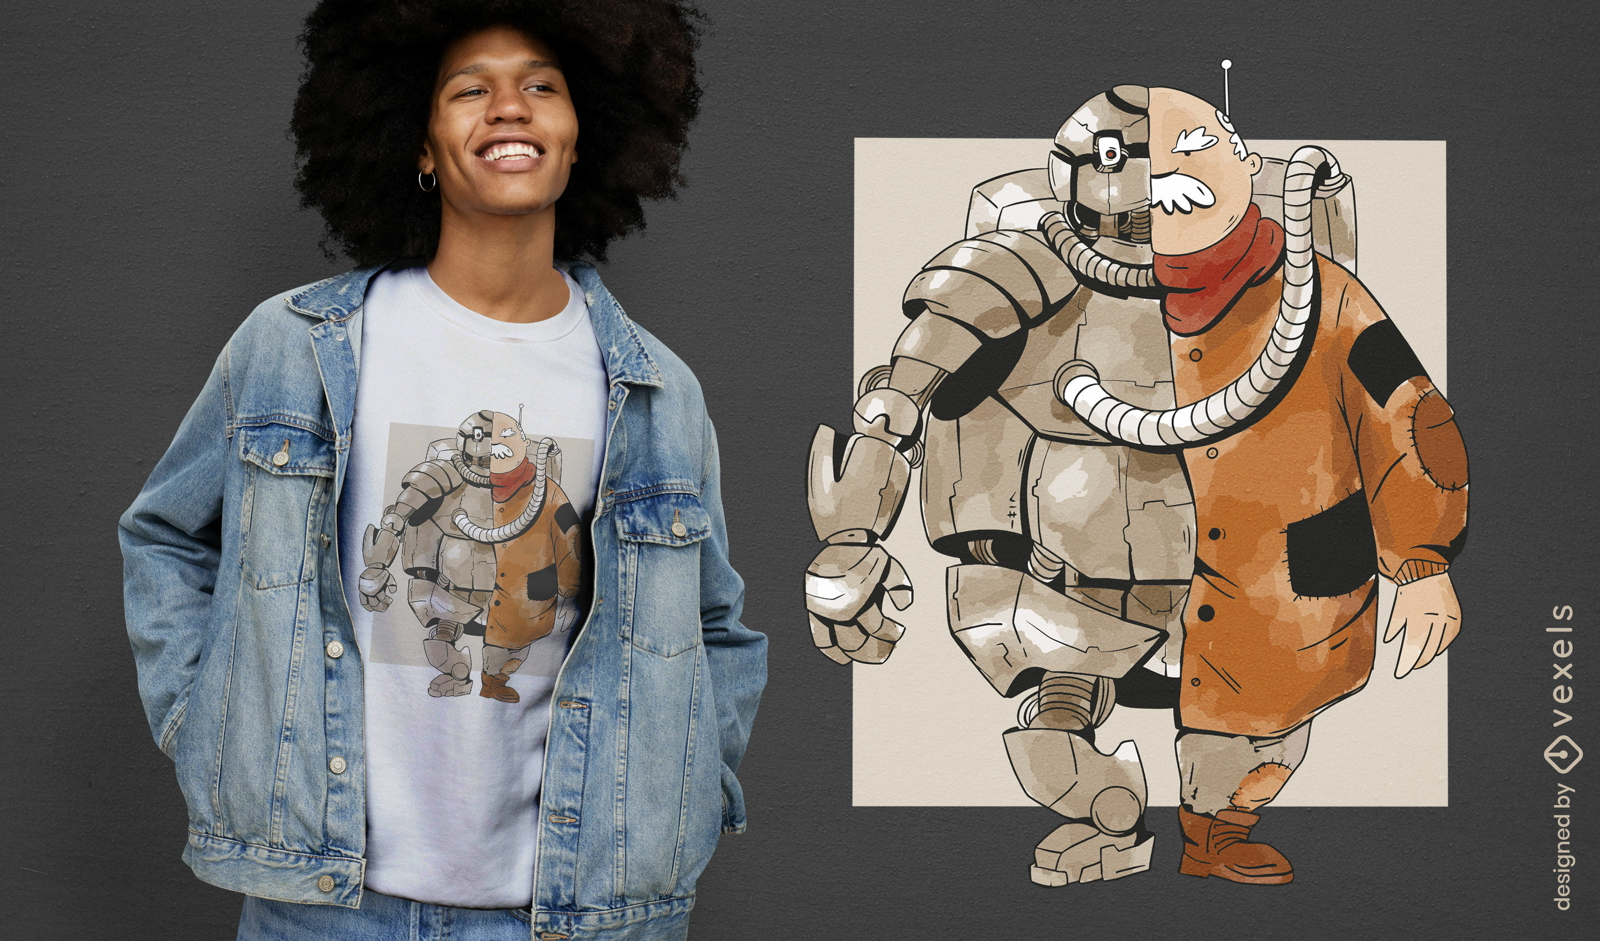 Half human and robot character t-shirt design